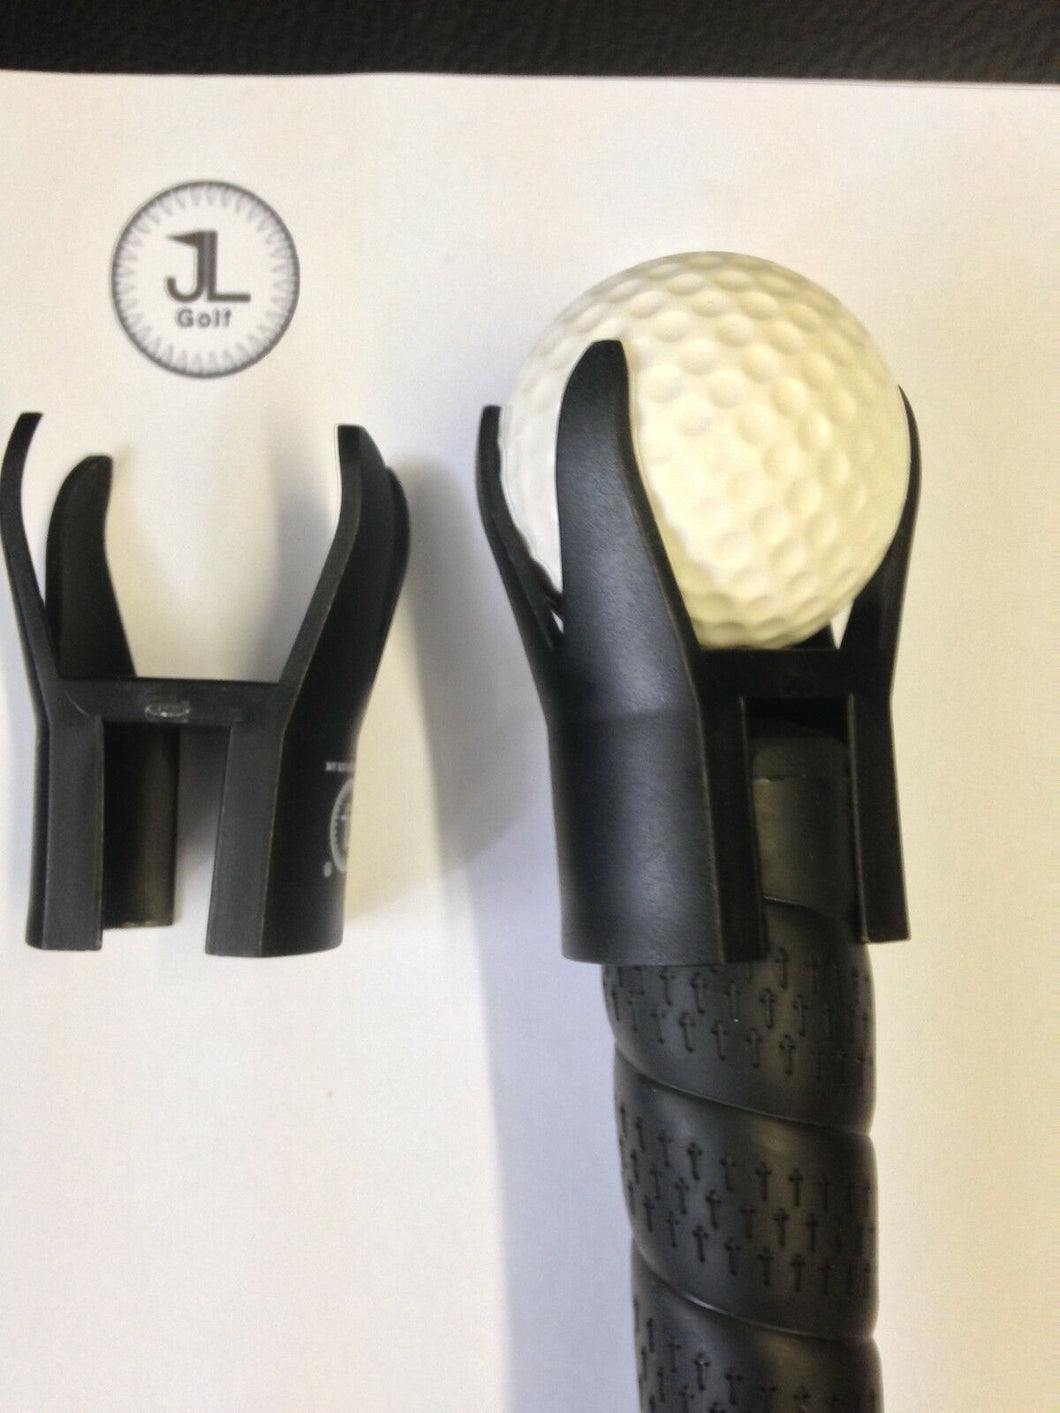 JL Golf Plastic Putter Suckers 5-pack